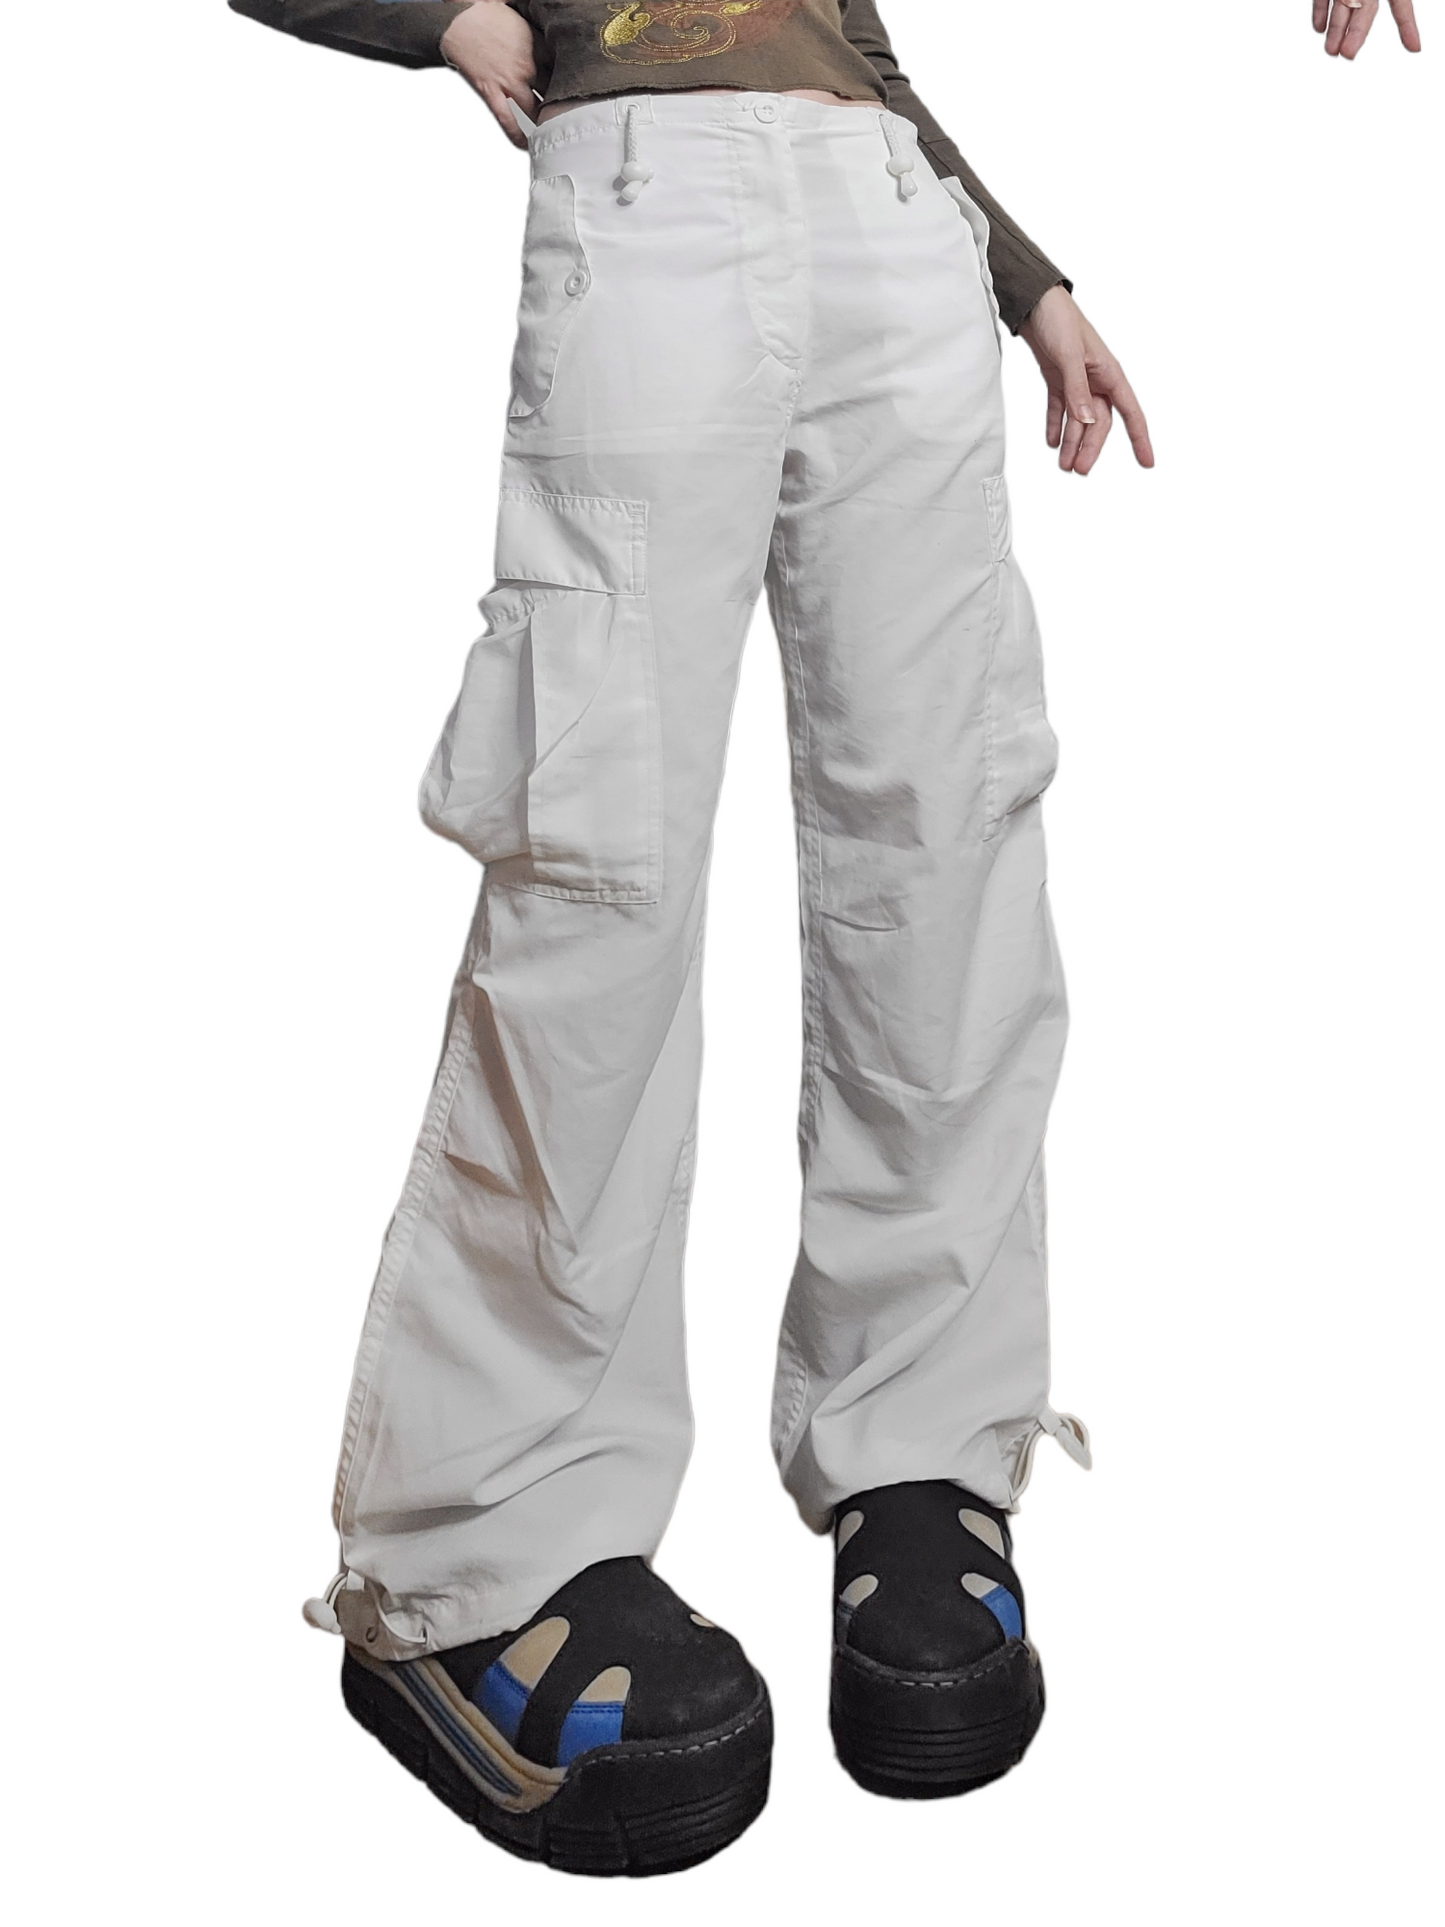 Parachute cargo blanc gorpcore techwear mutipoches ufo 90s rave skater utility sportwear